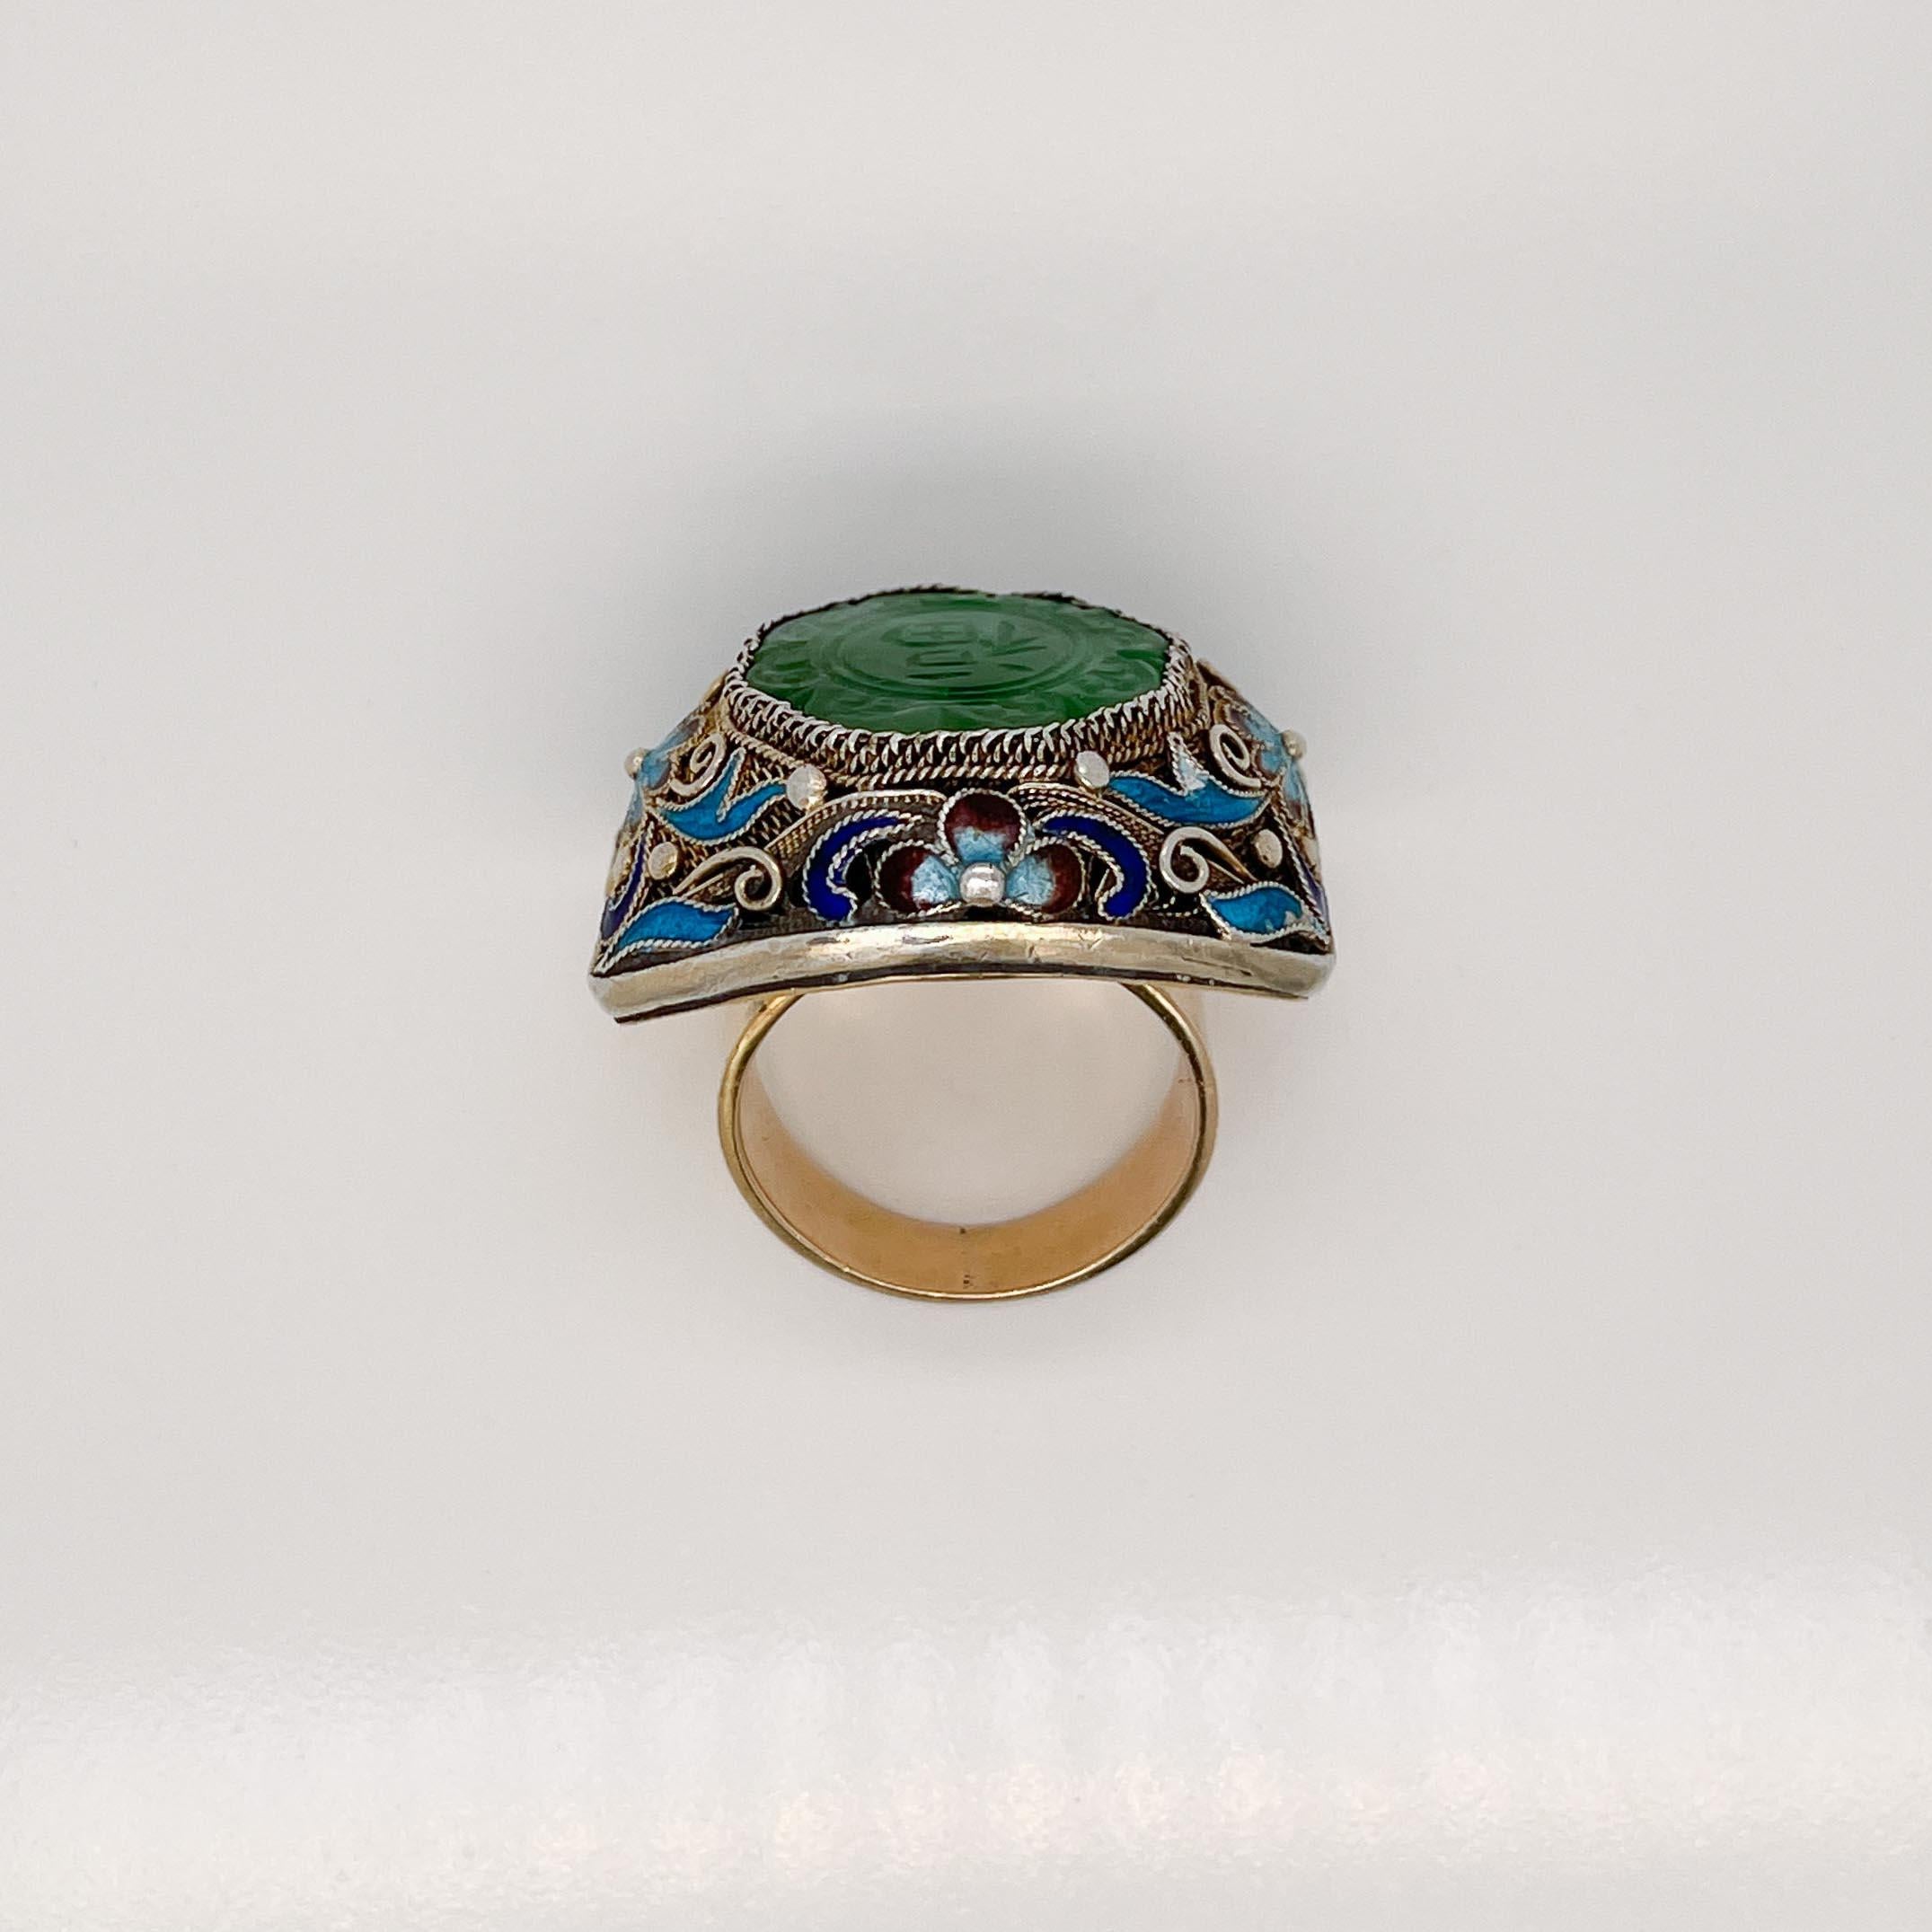 Women's or Men's Old or Antique Chinese 14K Gold, Filigree Silver, Enamel, & Jade Signet Ring